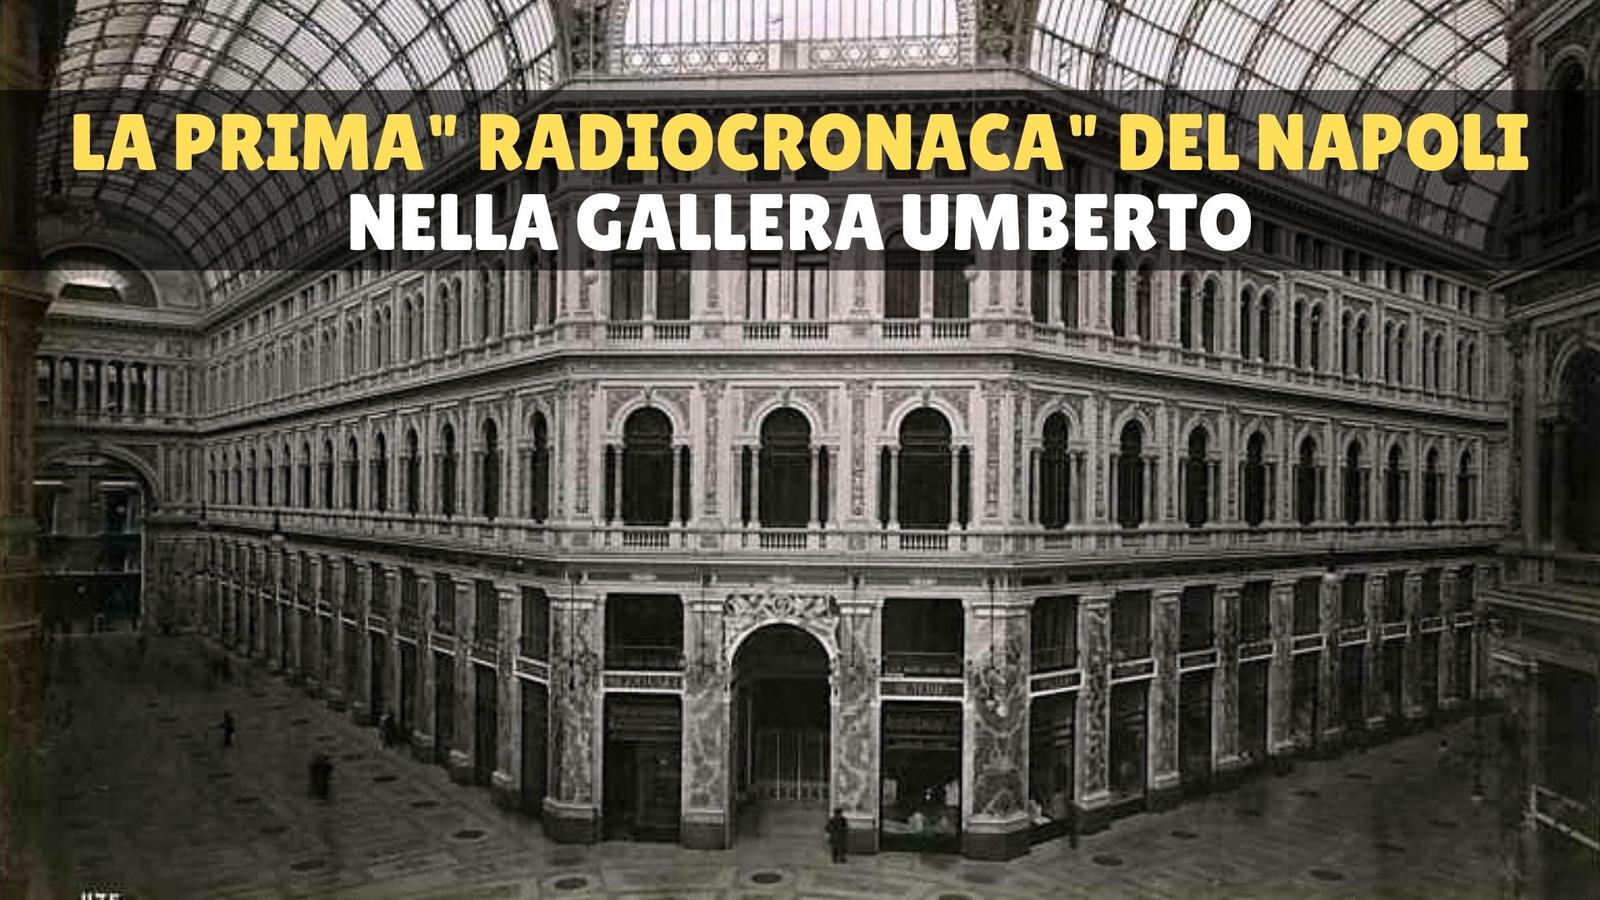 La prima radiocronaca del Napoli fu improvvisata in Galleria Umberto